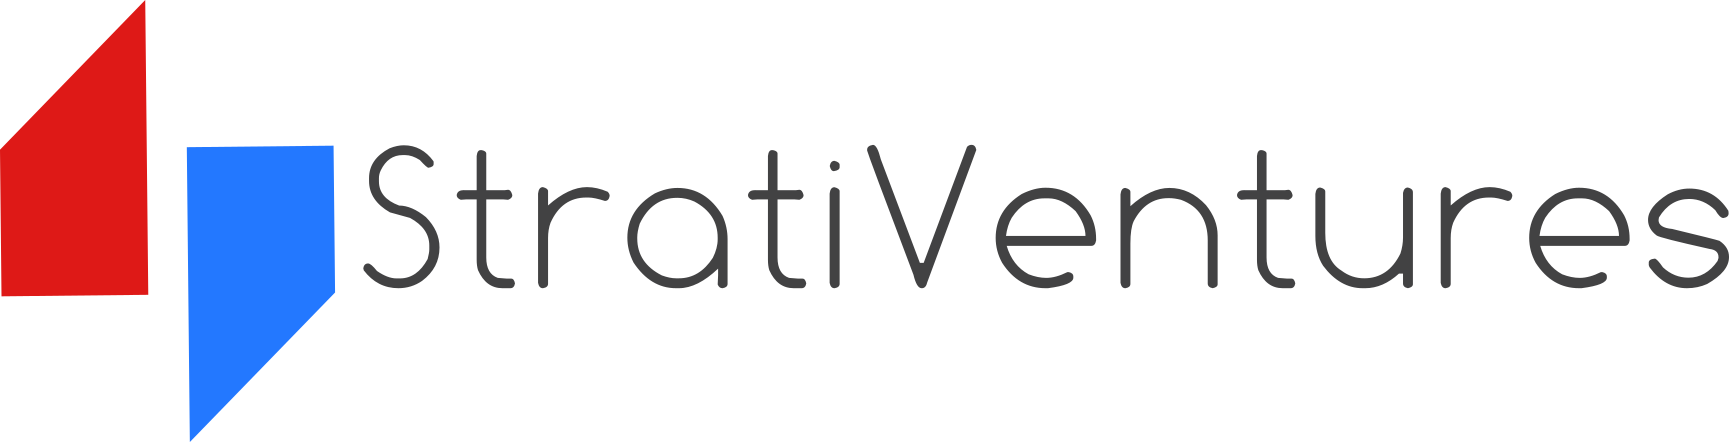 Strativentures Logo